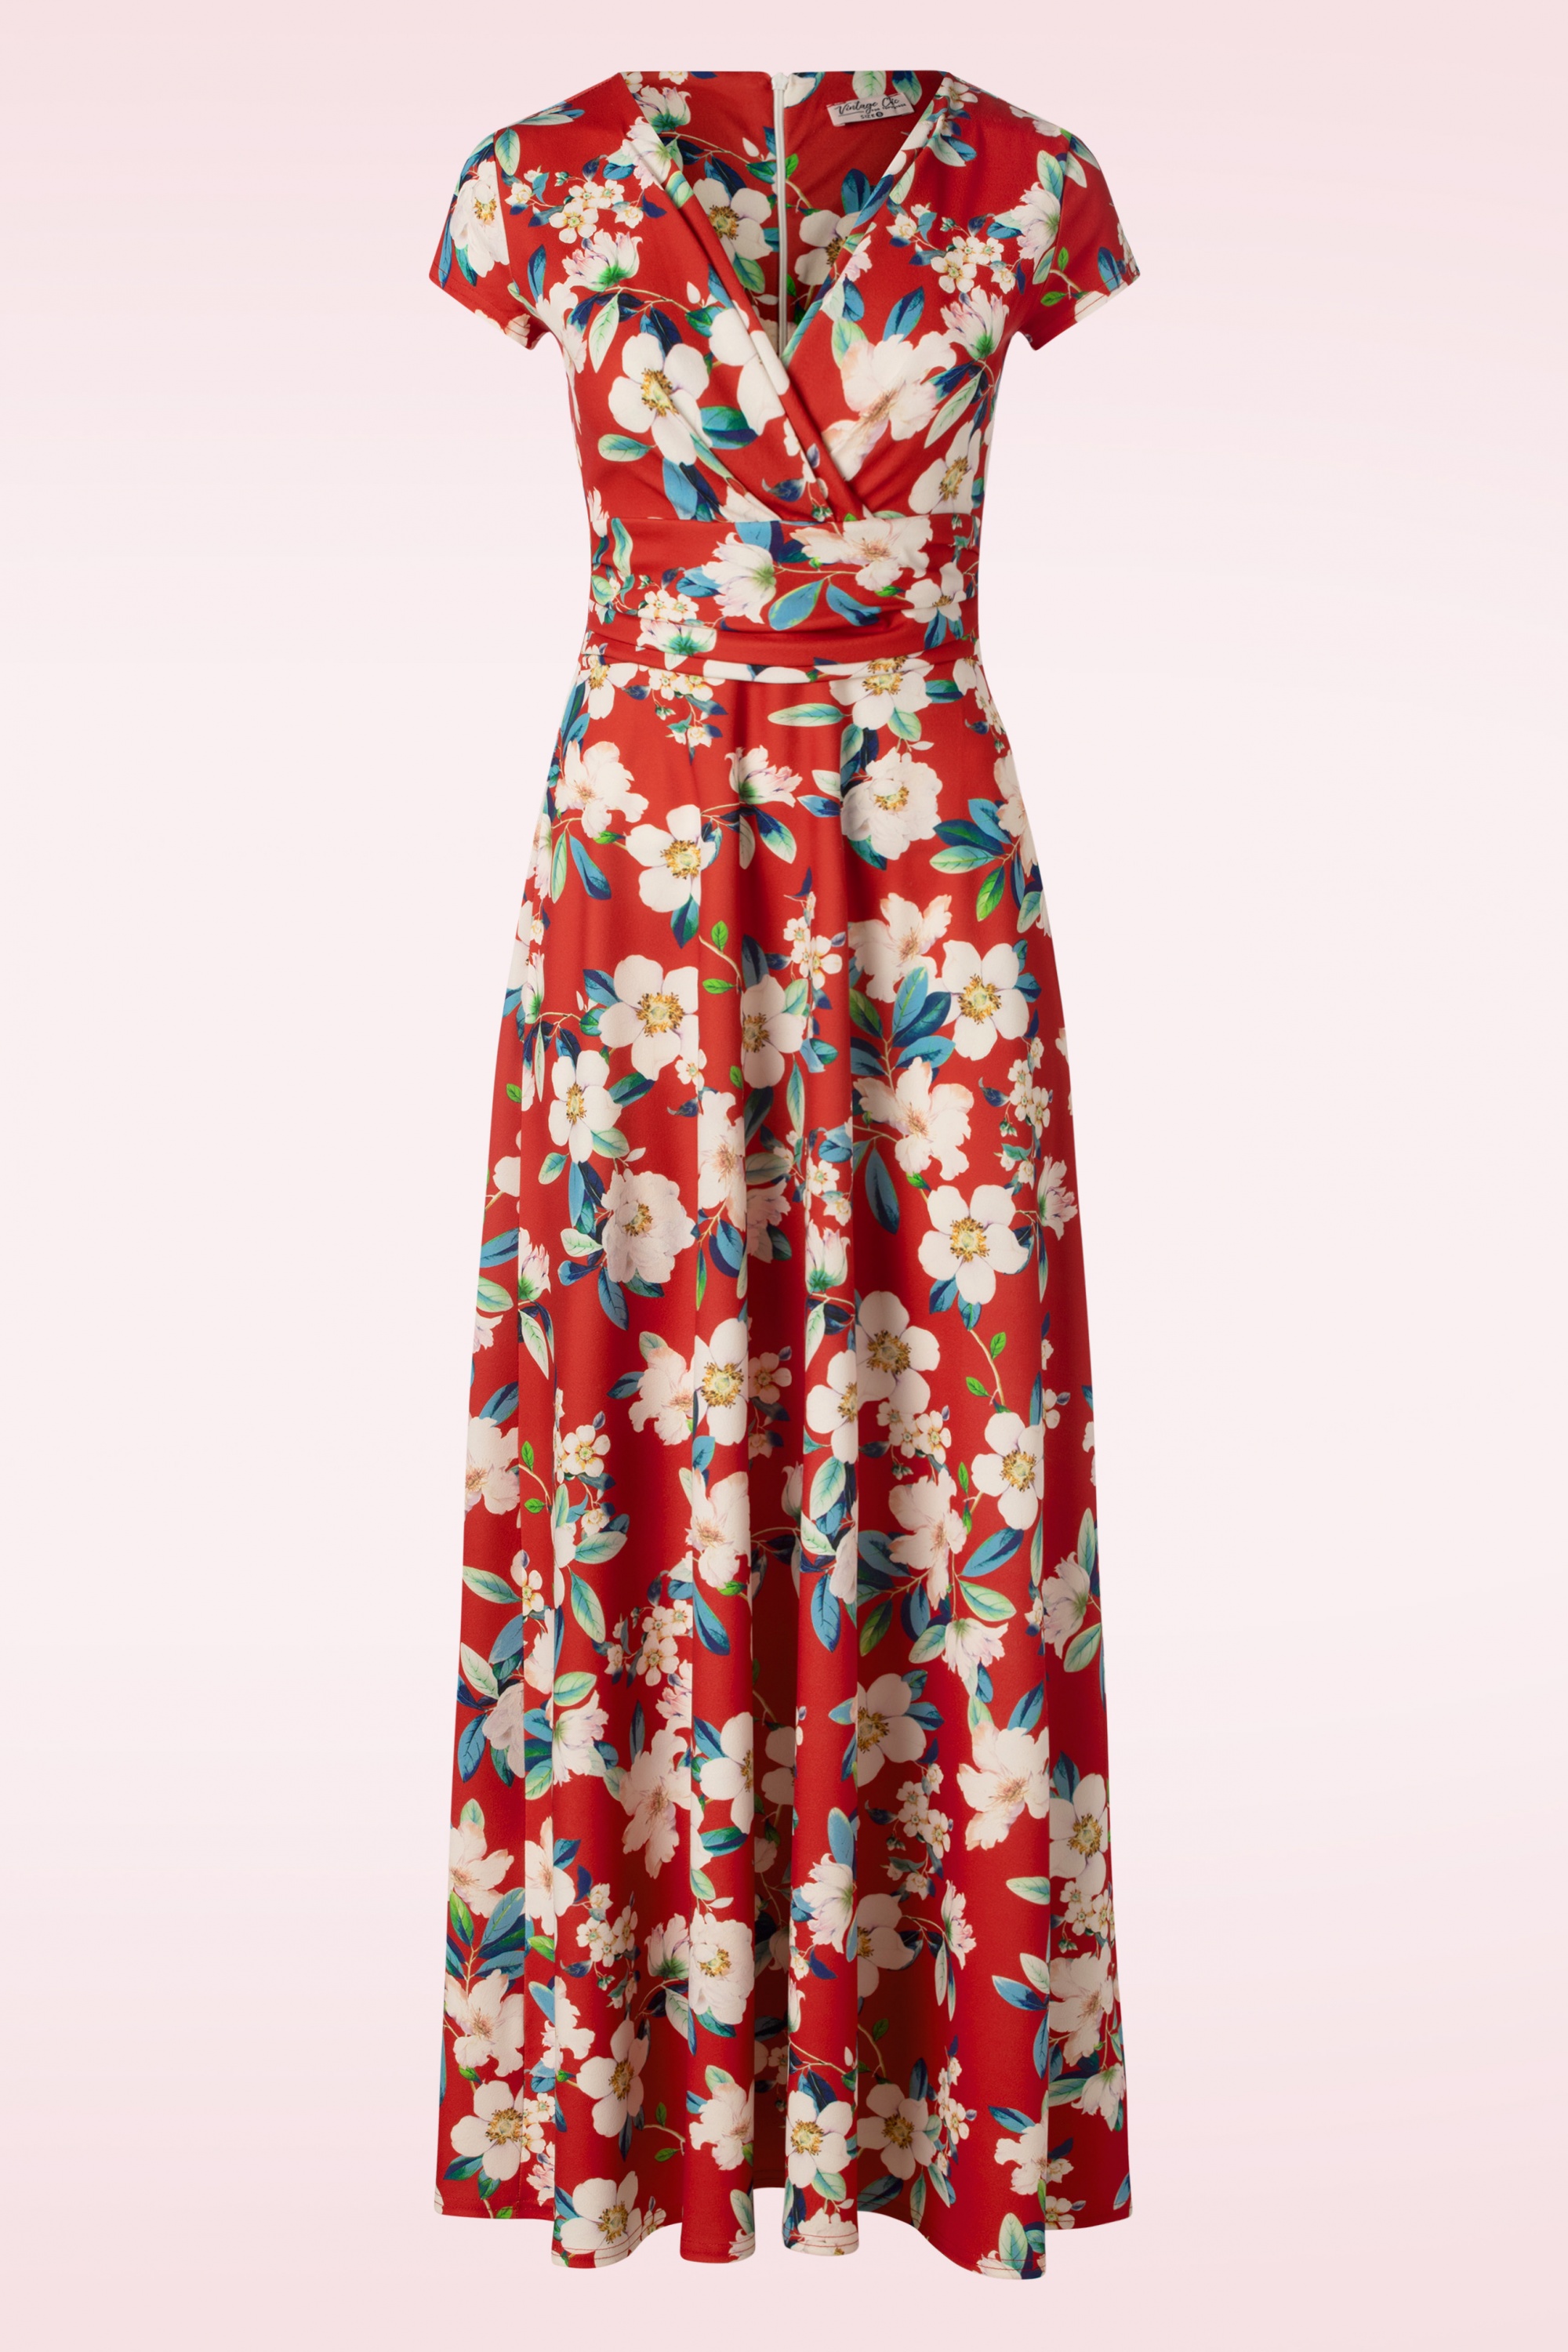 Vintage Chic for Topvintage - Rinda bloemen maxi jurk in warm rood